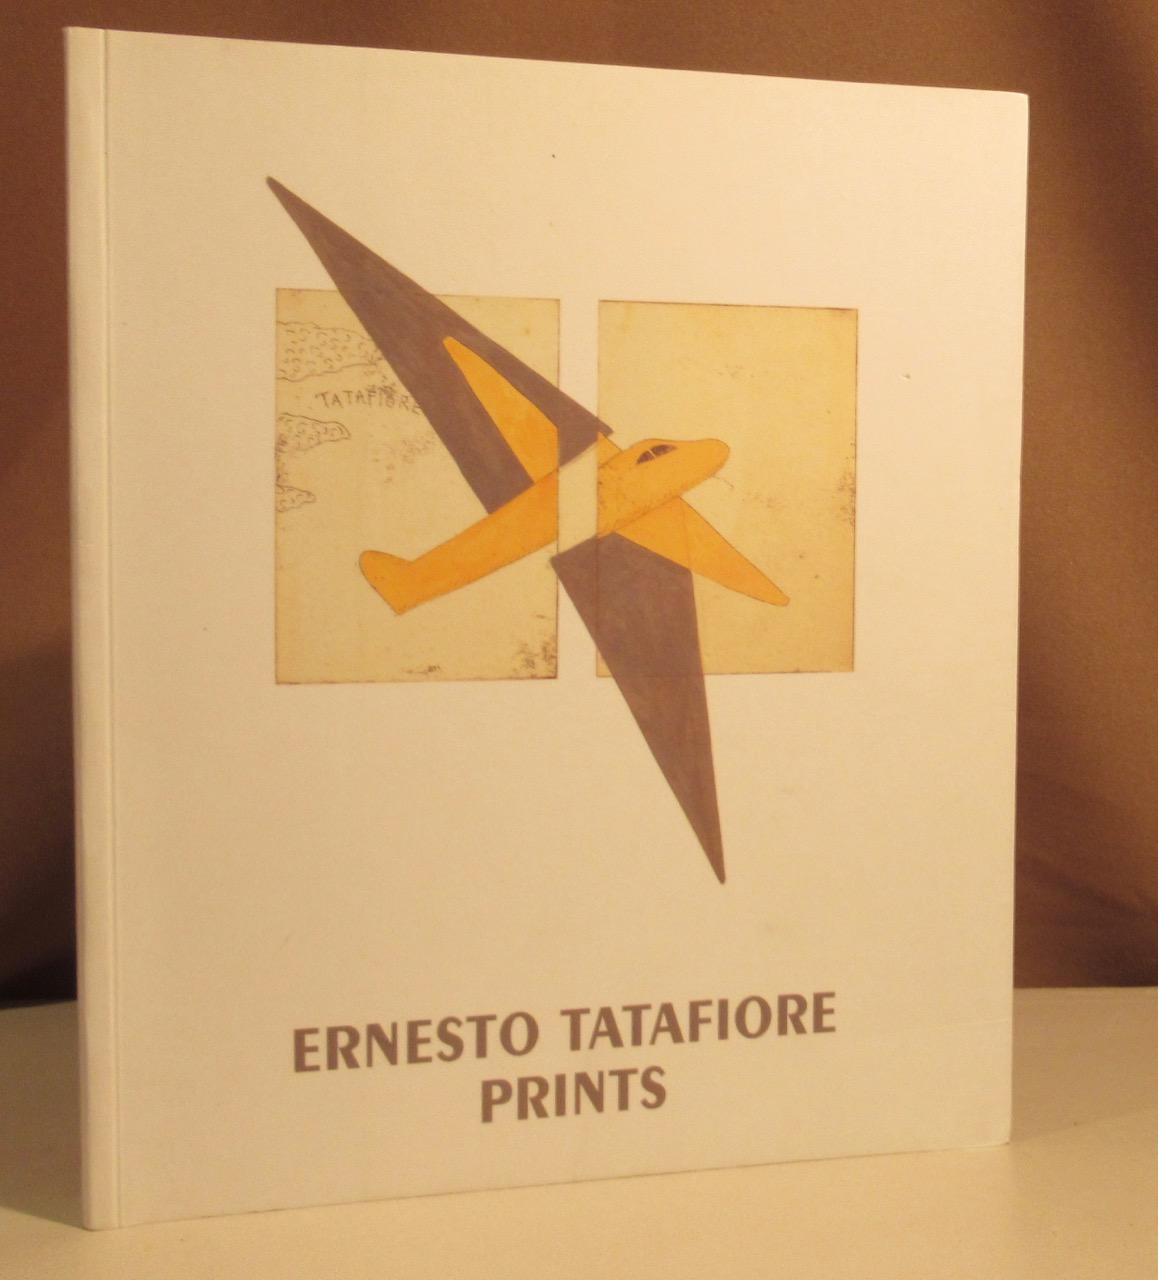 Ernesto Tatafiore prints. Complete catalogue of prints 1968 - 1998 compiled by Thomas Levy. - Tatafiore, Ernesto - Levy, Thomas (Hrsg.).